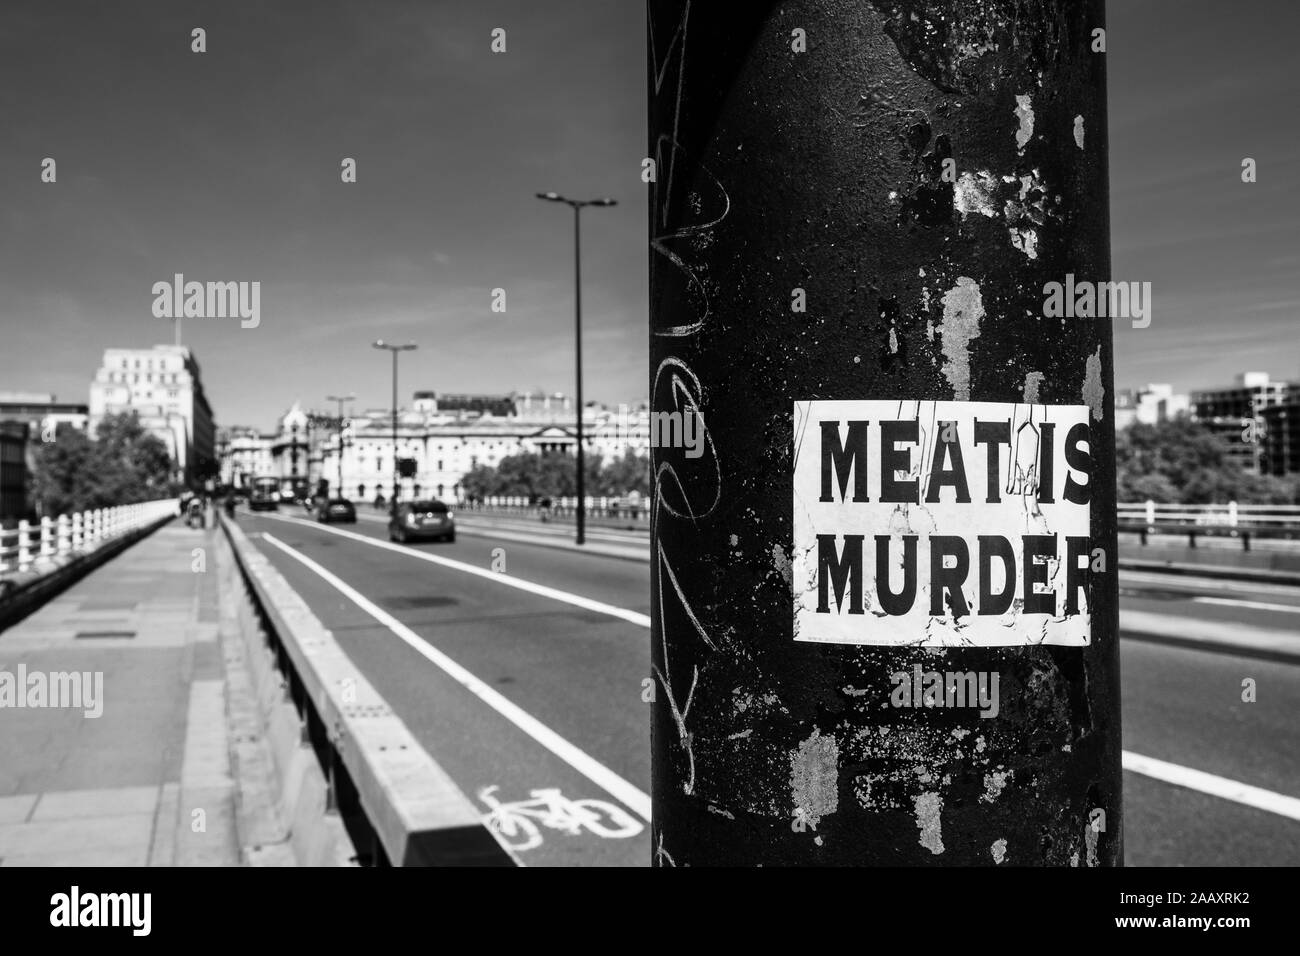 Meat is Murder sign, Waterloo bridge, London Stock Photo